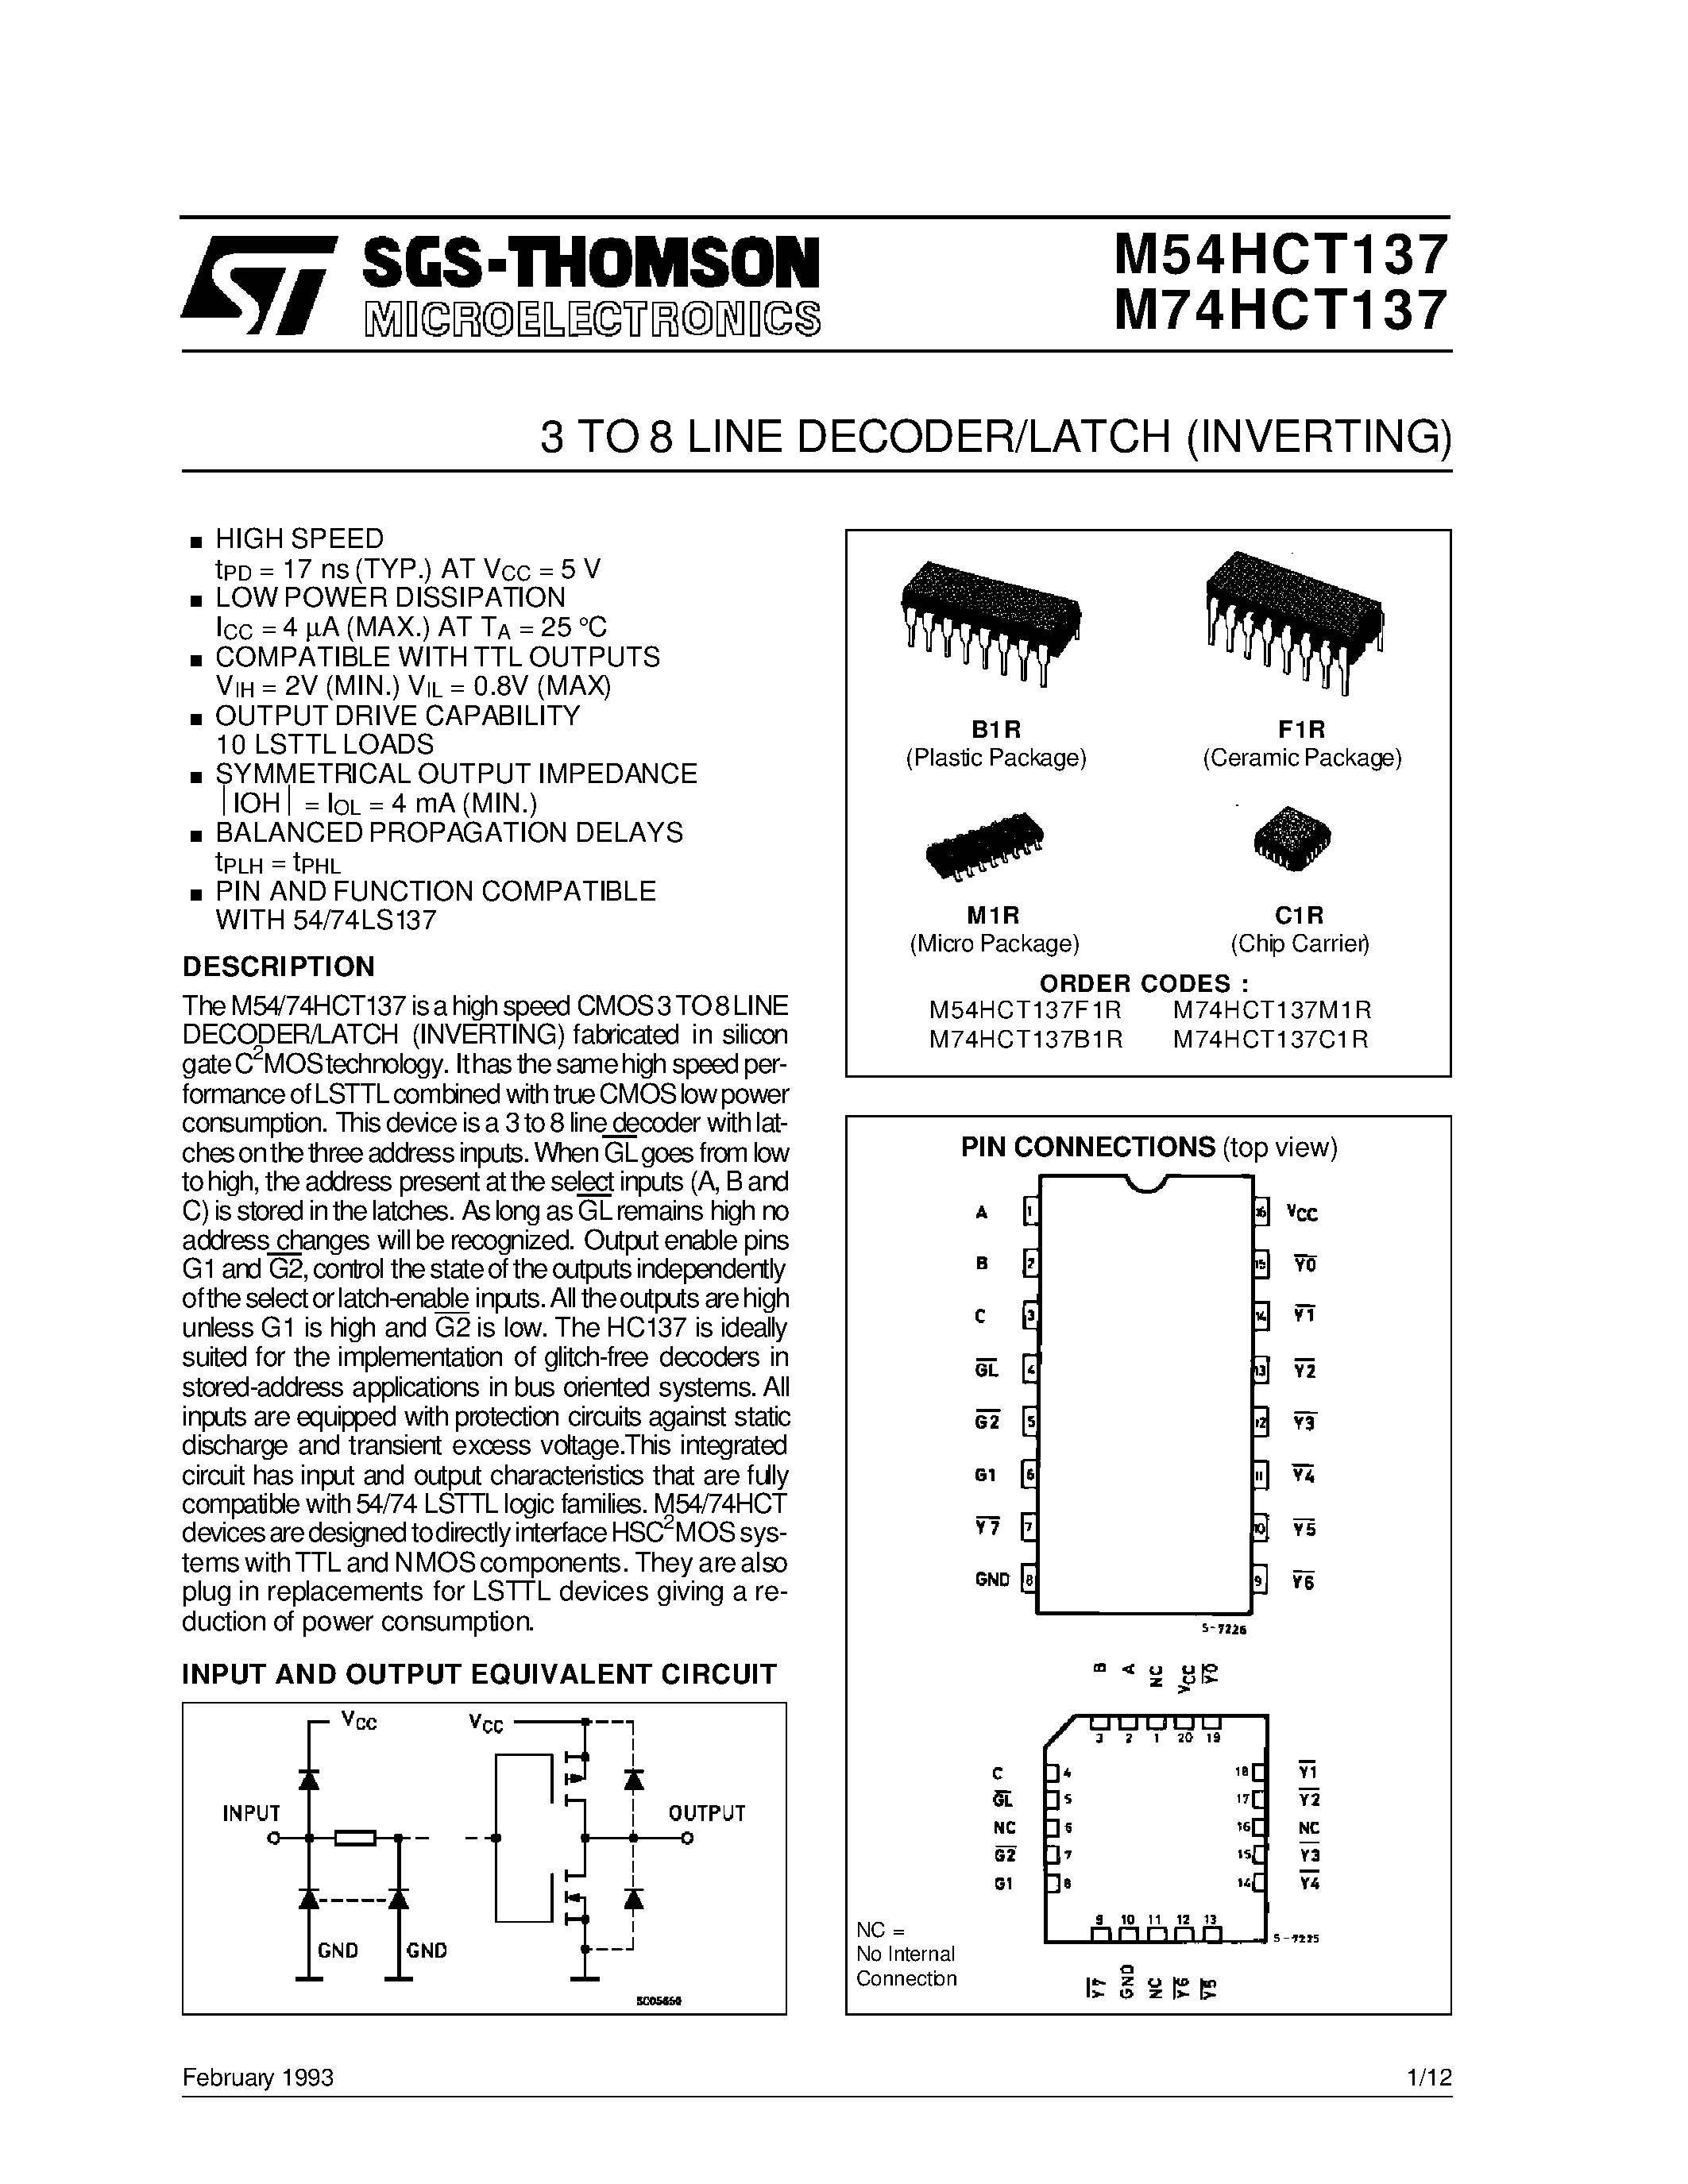 Datasheet M74HCT137 - 3 TO 8 LINE DECODER/LATCH INVERTING page 1